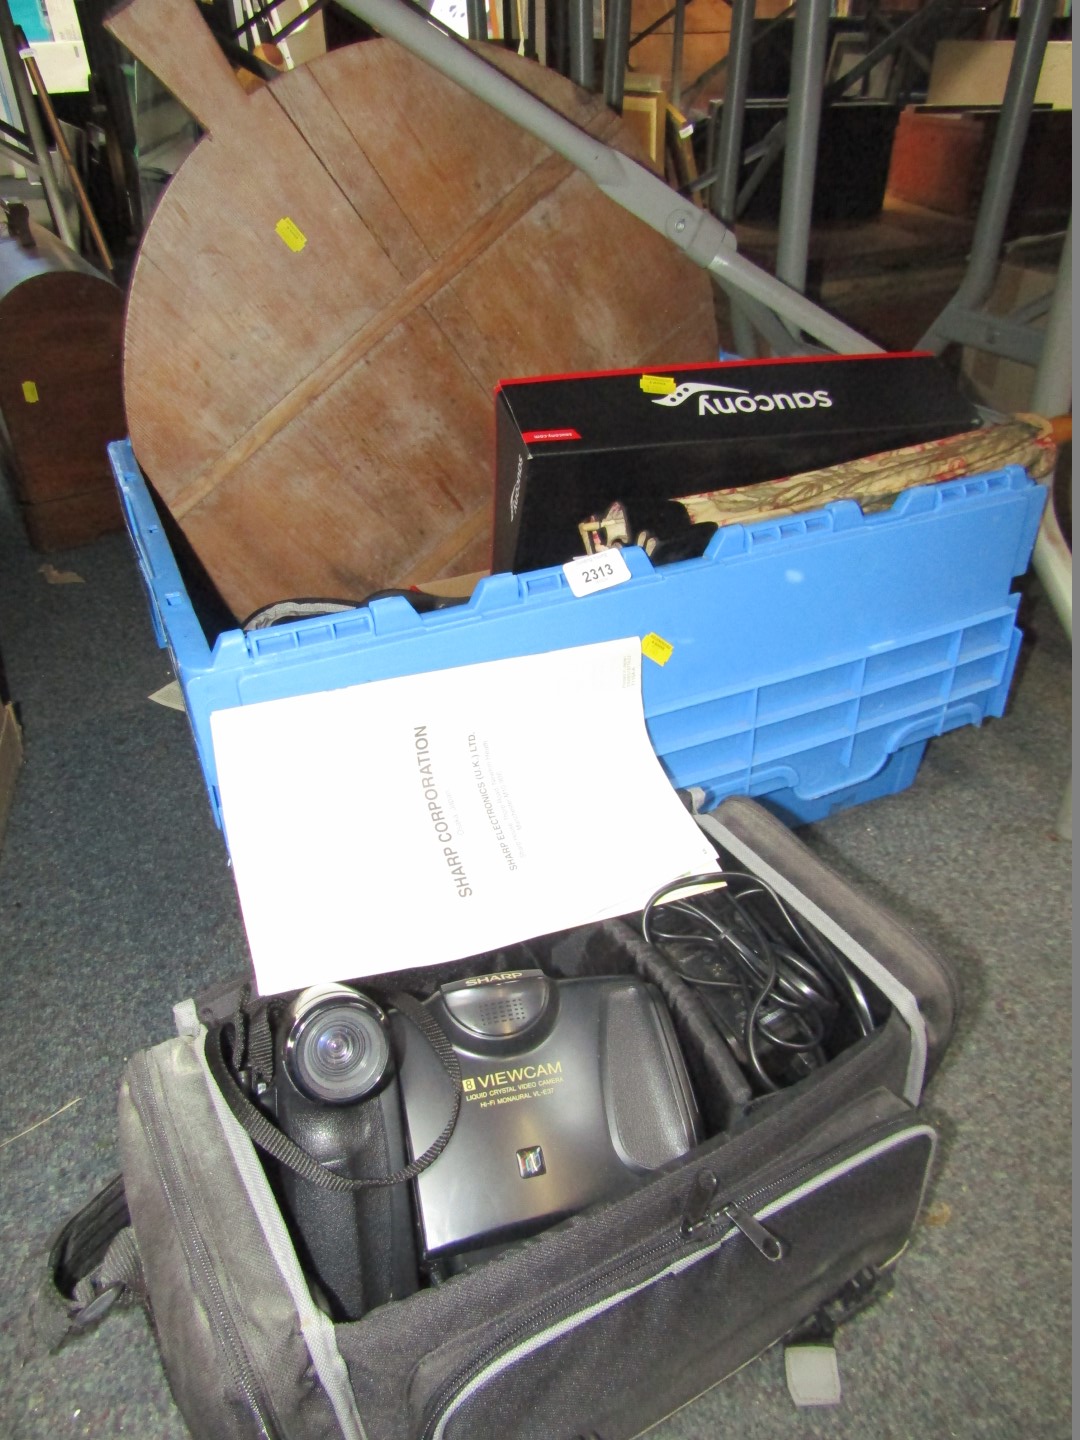 Assorted household wares, comprising Sharp camcorder, camera bag and contents of Nikon Digital camer